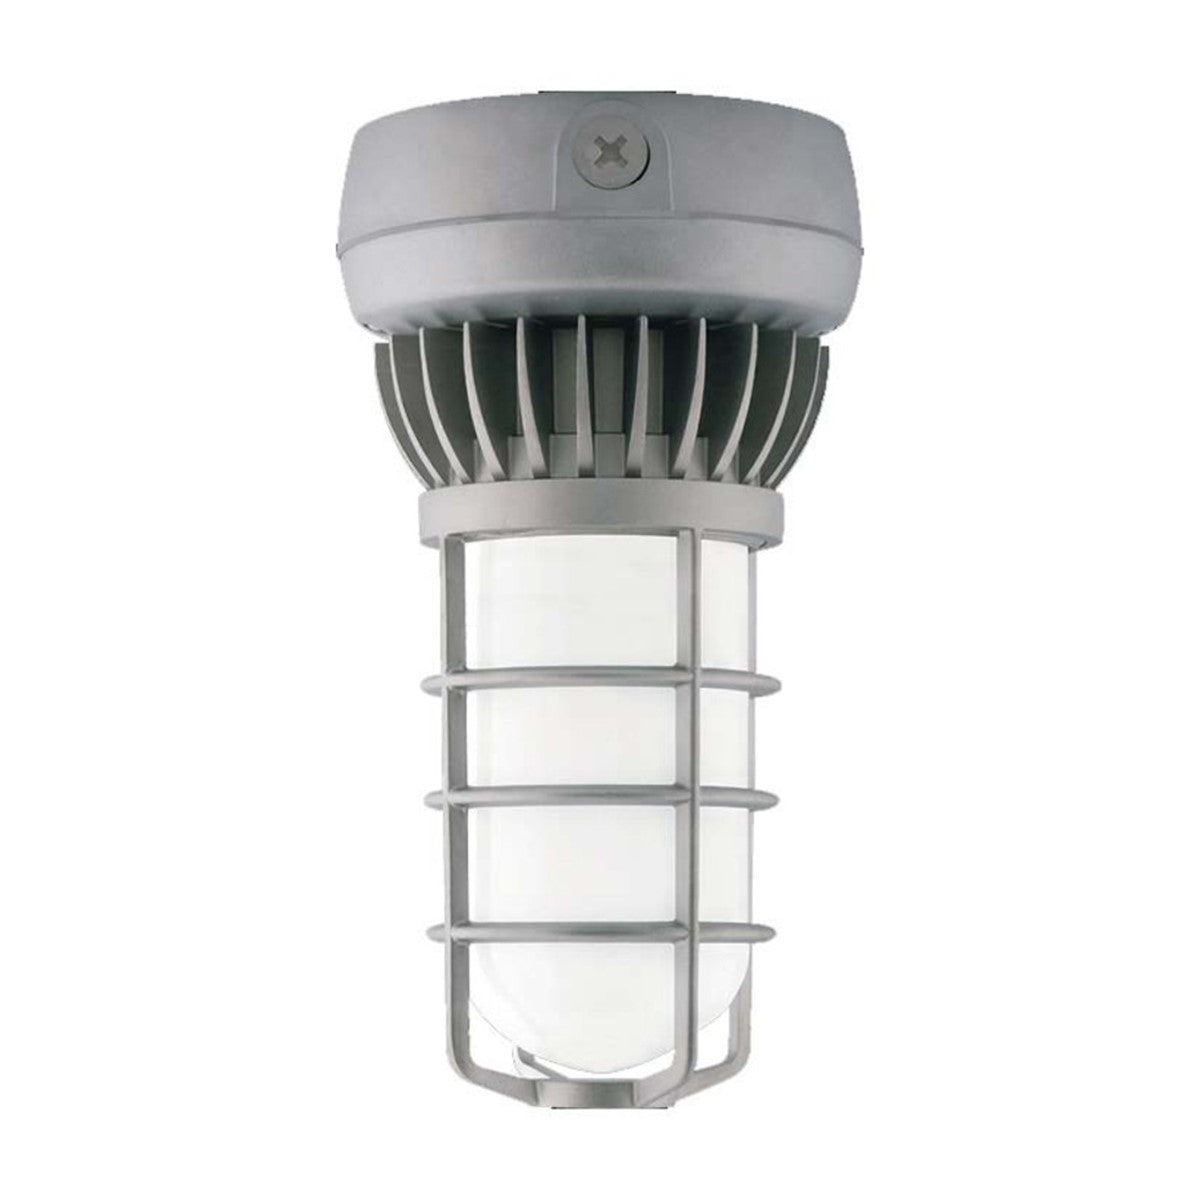 LED Jelly Jar Light Fixture 13 Watts 730 Lumens 5000K 120-277V